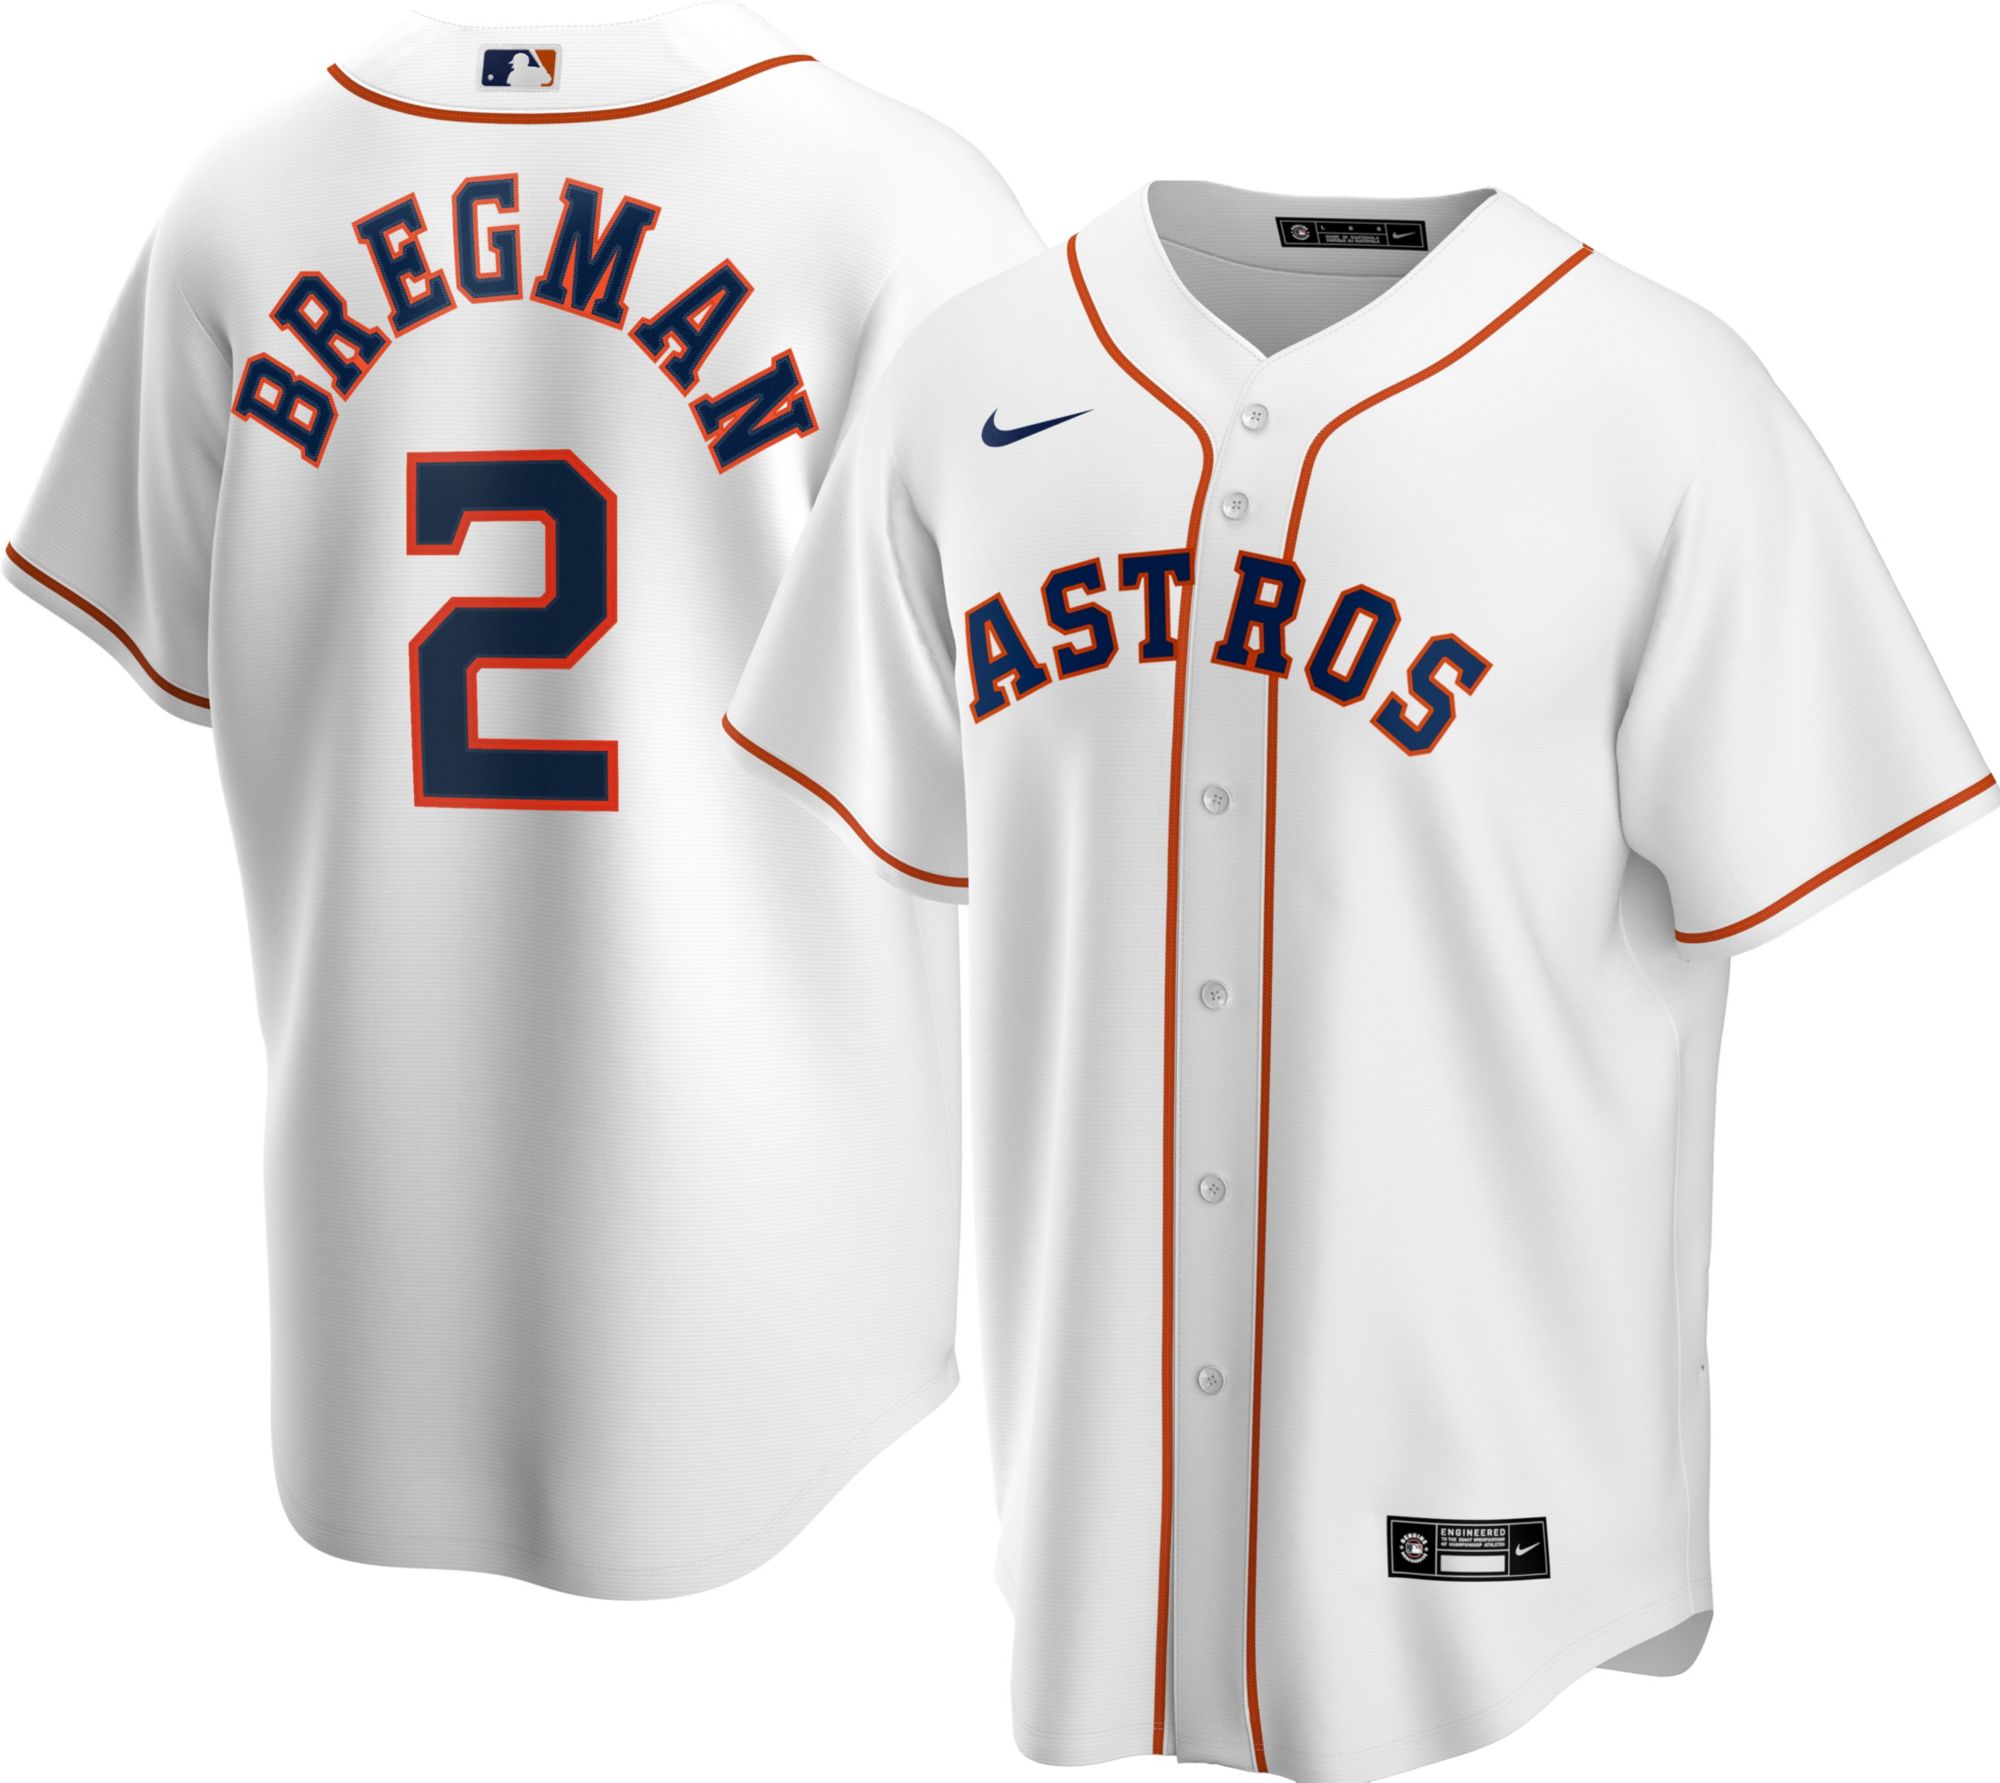 #27 Jose Altuve MLB Houston Astros SGA Shooting Star Jersey Replica Adult XL